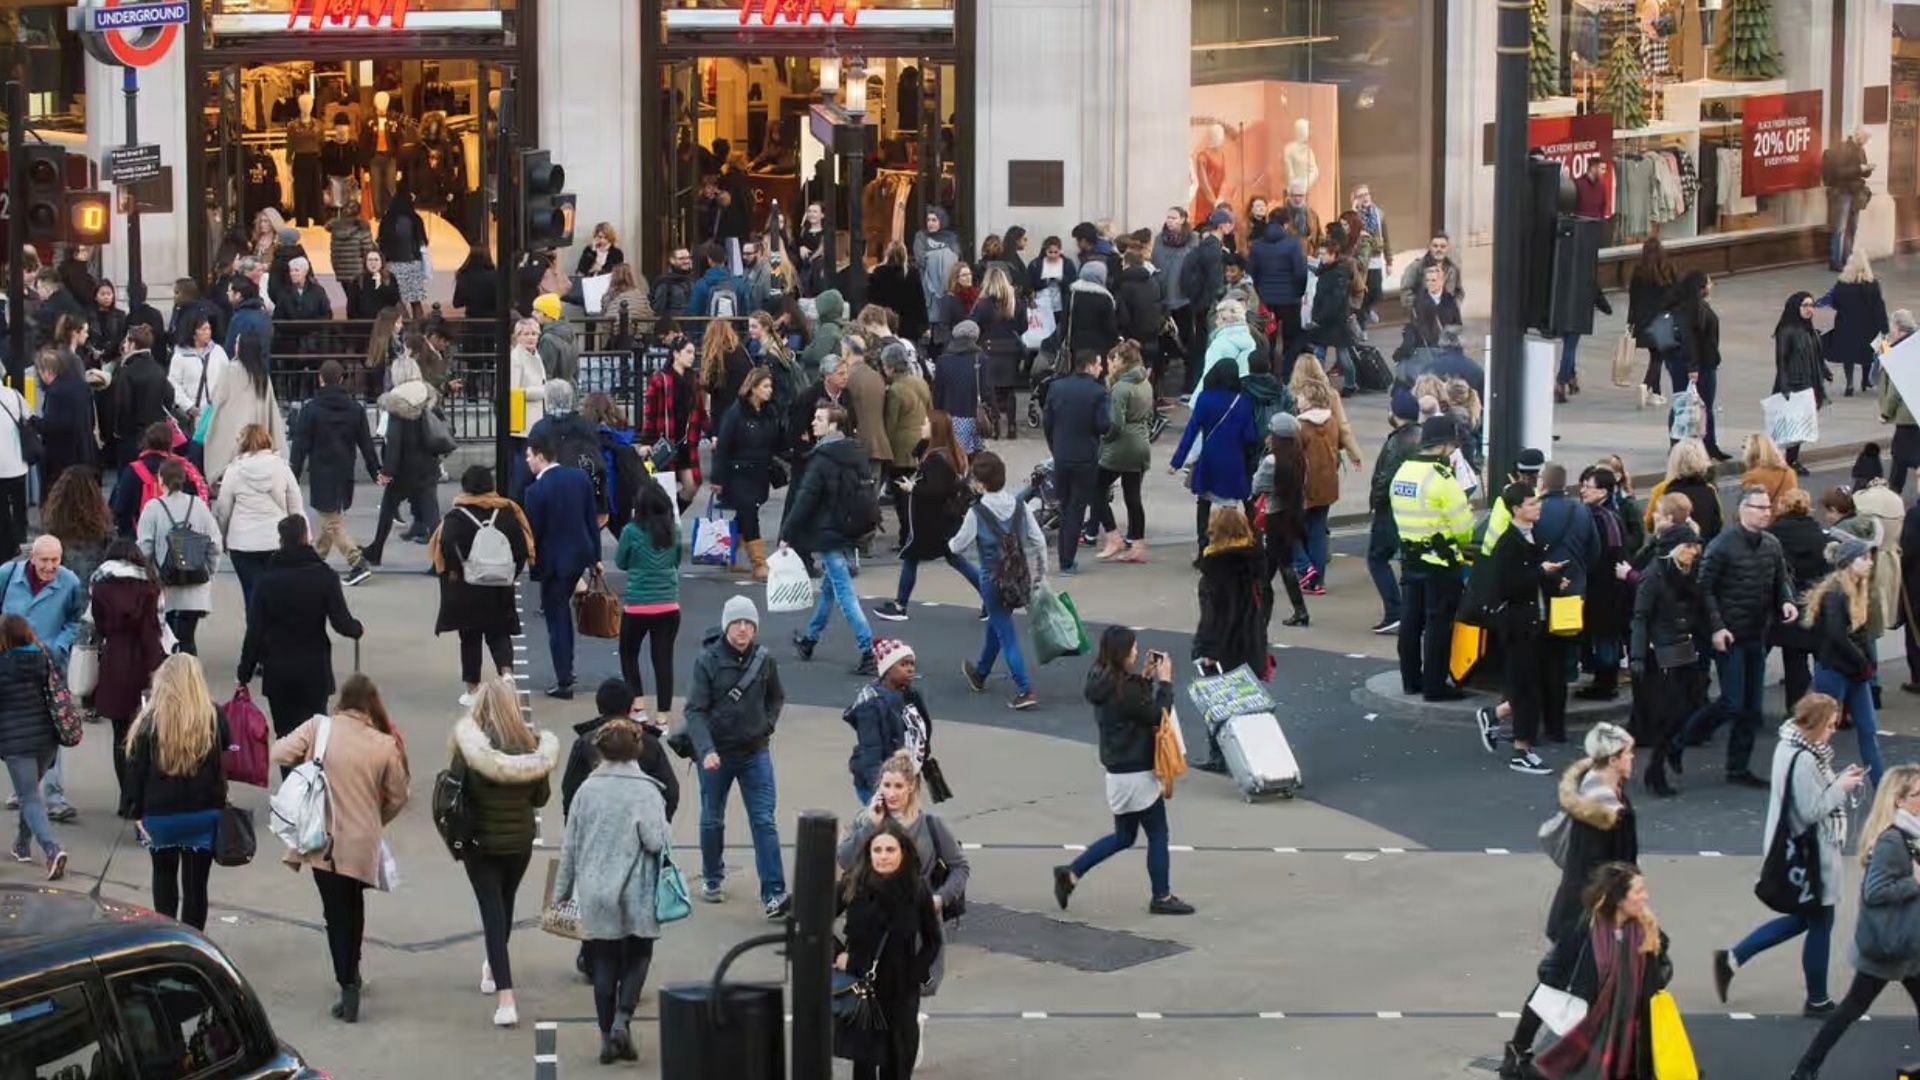 TikTok-provoked mass disruption on Oxford Street makes netizens distressed. (Image via Linda Nylind)